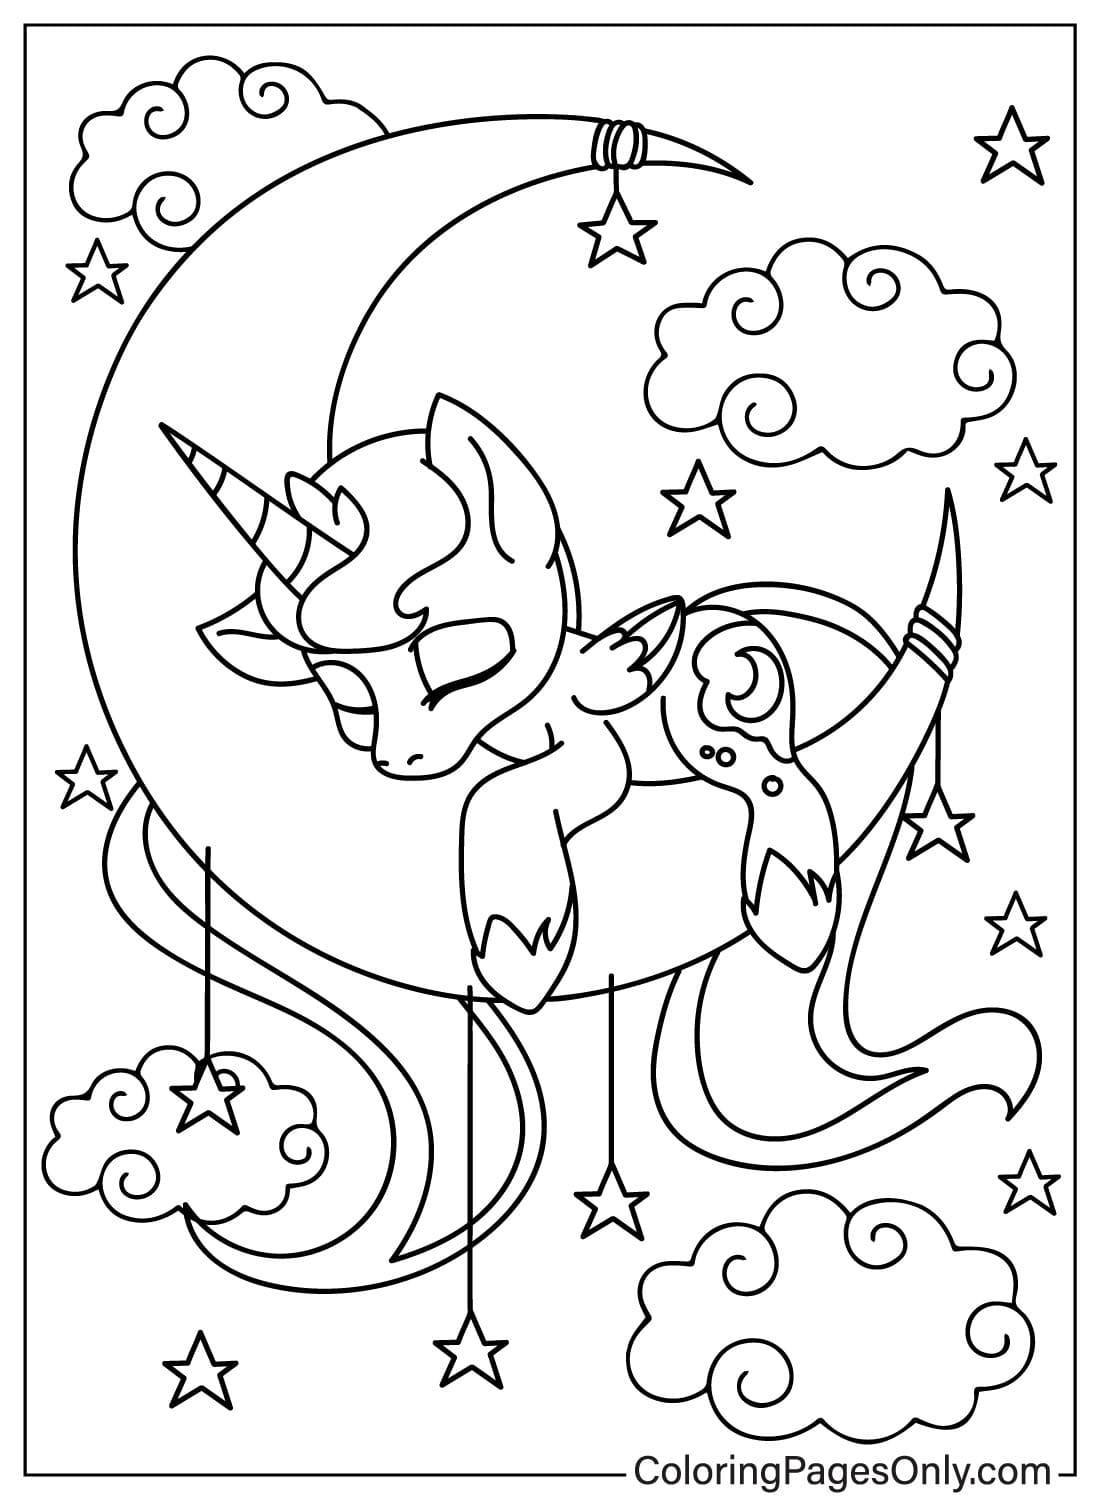 Princess Luna Sleeps on the Moon Coloring Page from Princess Luna